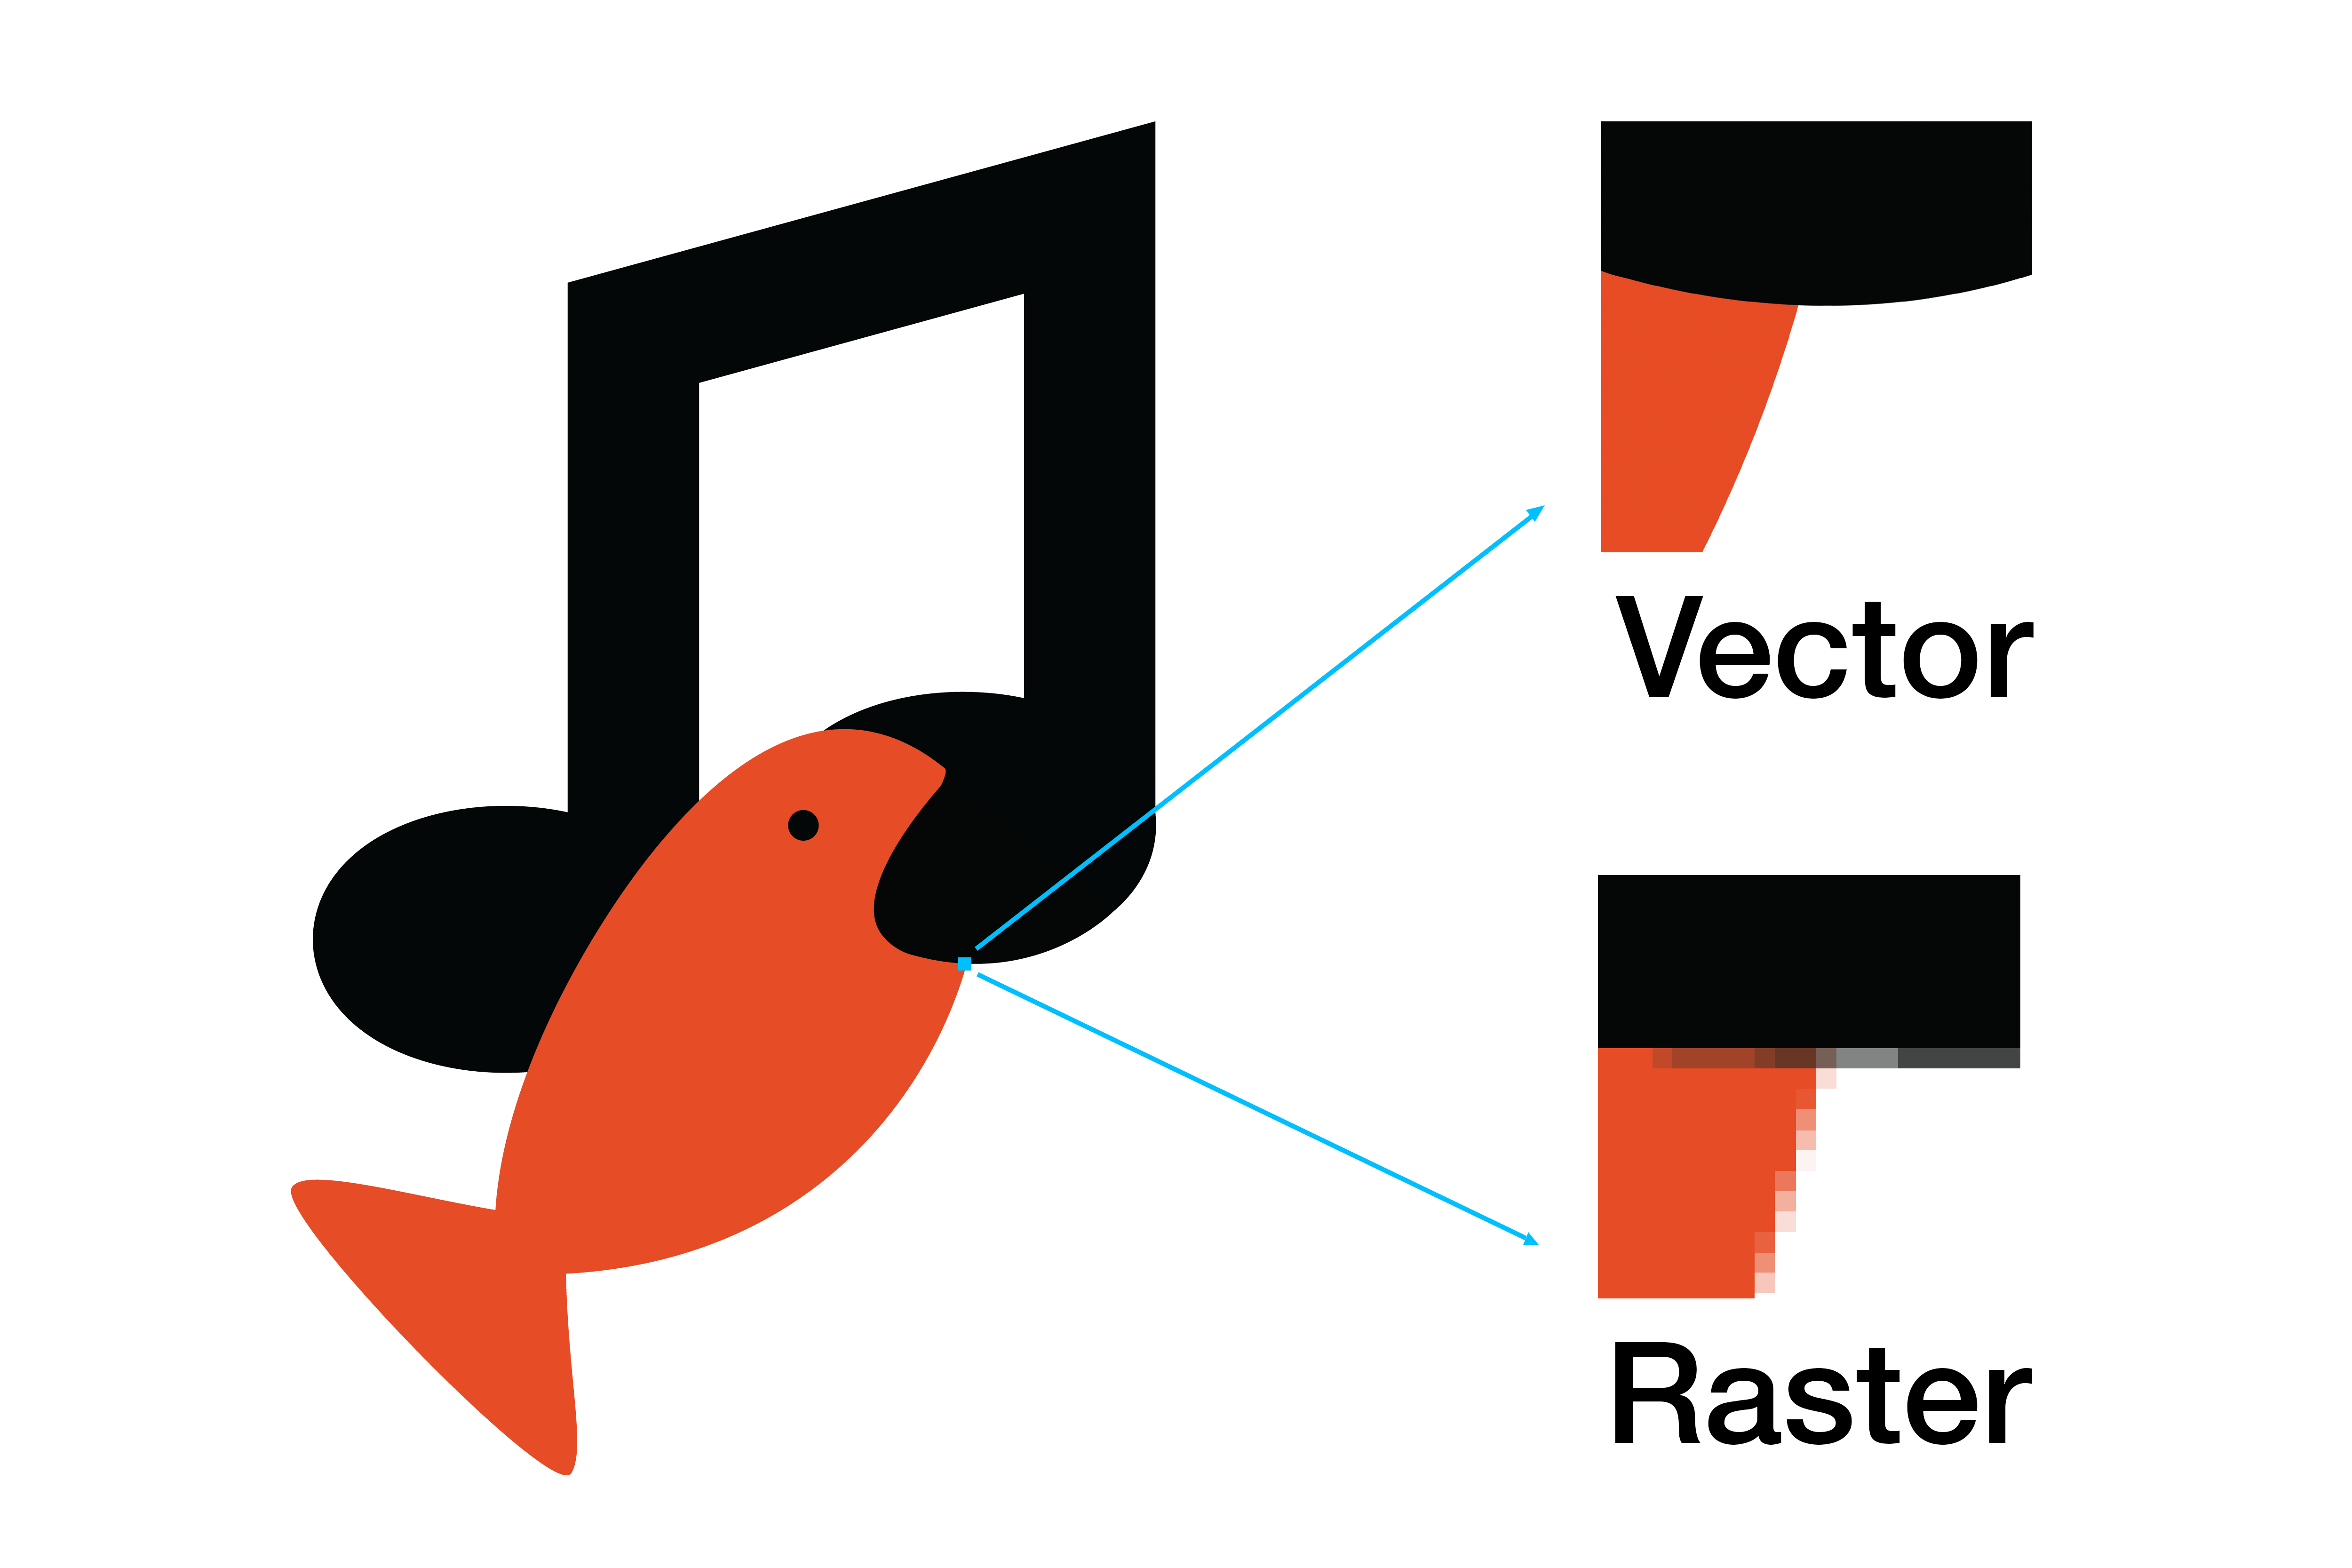 vector or raster